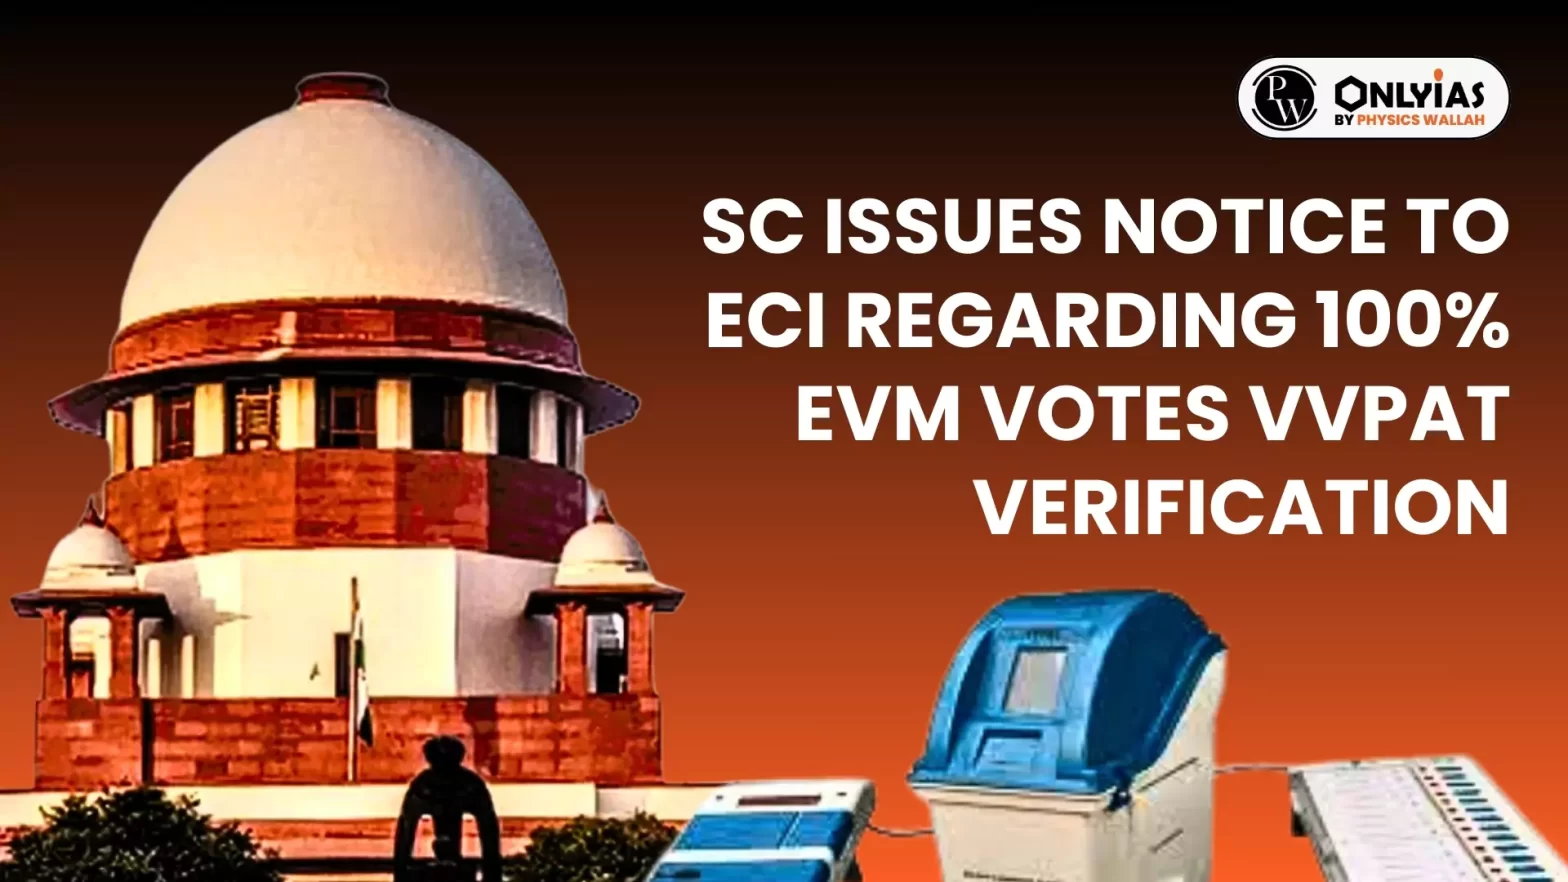 SC Issues Notice to ECI Regarding 100% EVM Votes VVPAT Verification